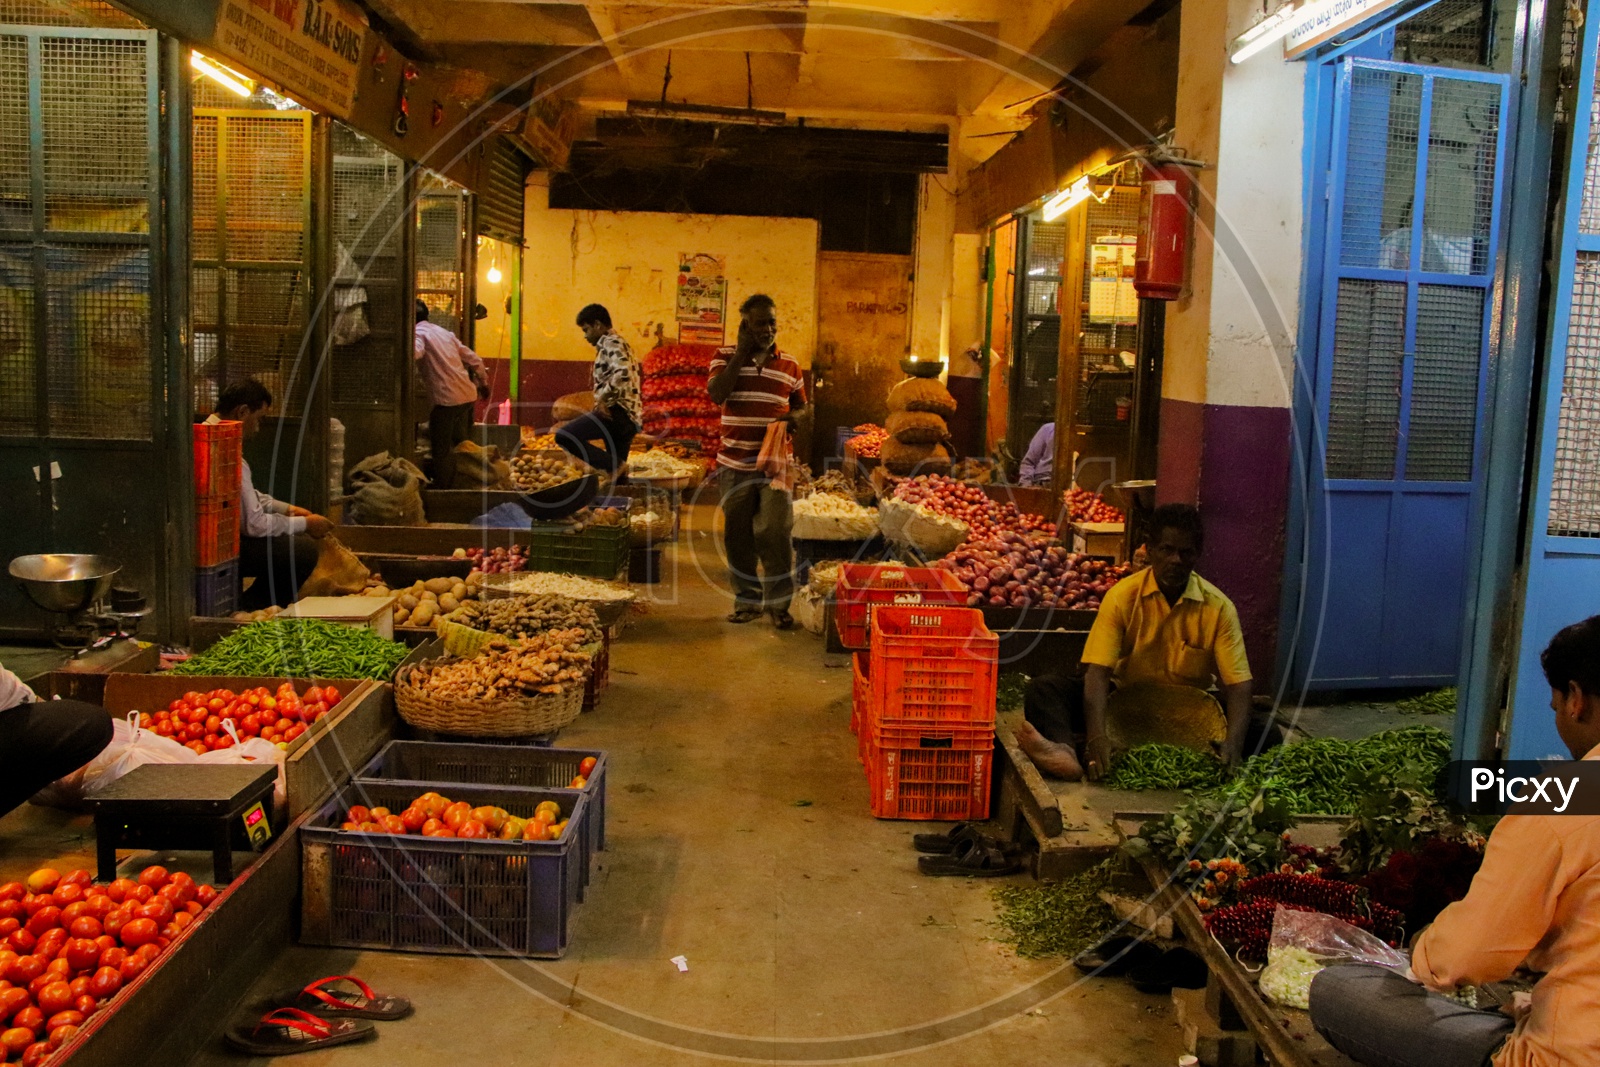 vegetable market